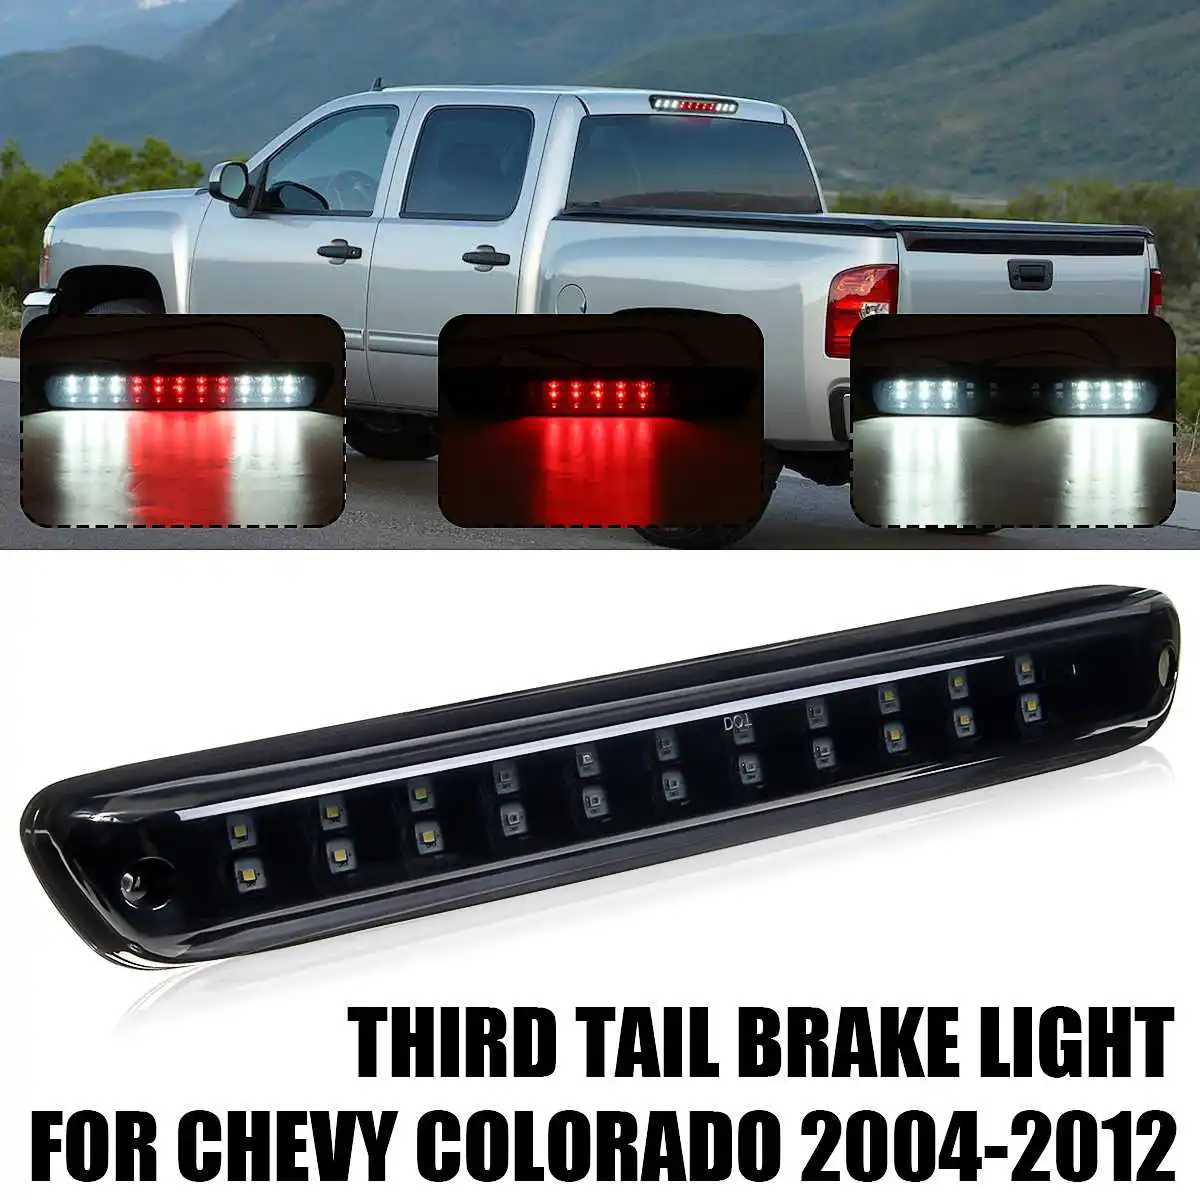 12 V/24 V автомобиль третий 3rd стоп-сигнал задний грузовые задние стоп-сигнала бар двойная строка дорожка для Chevy Колорадо/gmc canyon 2004-2012